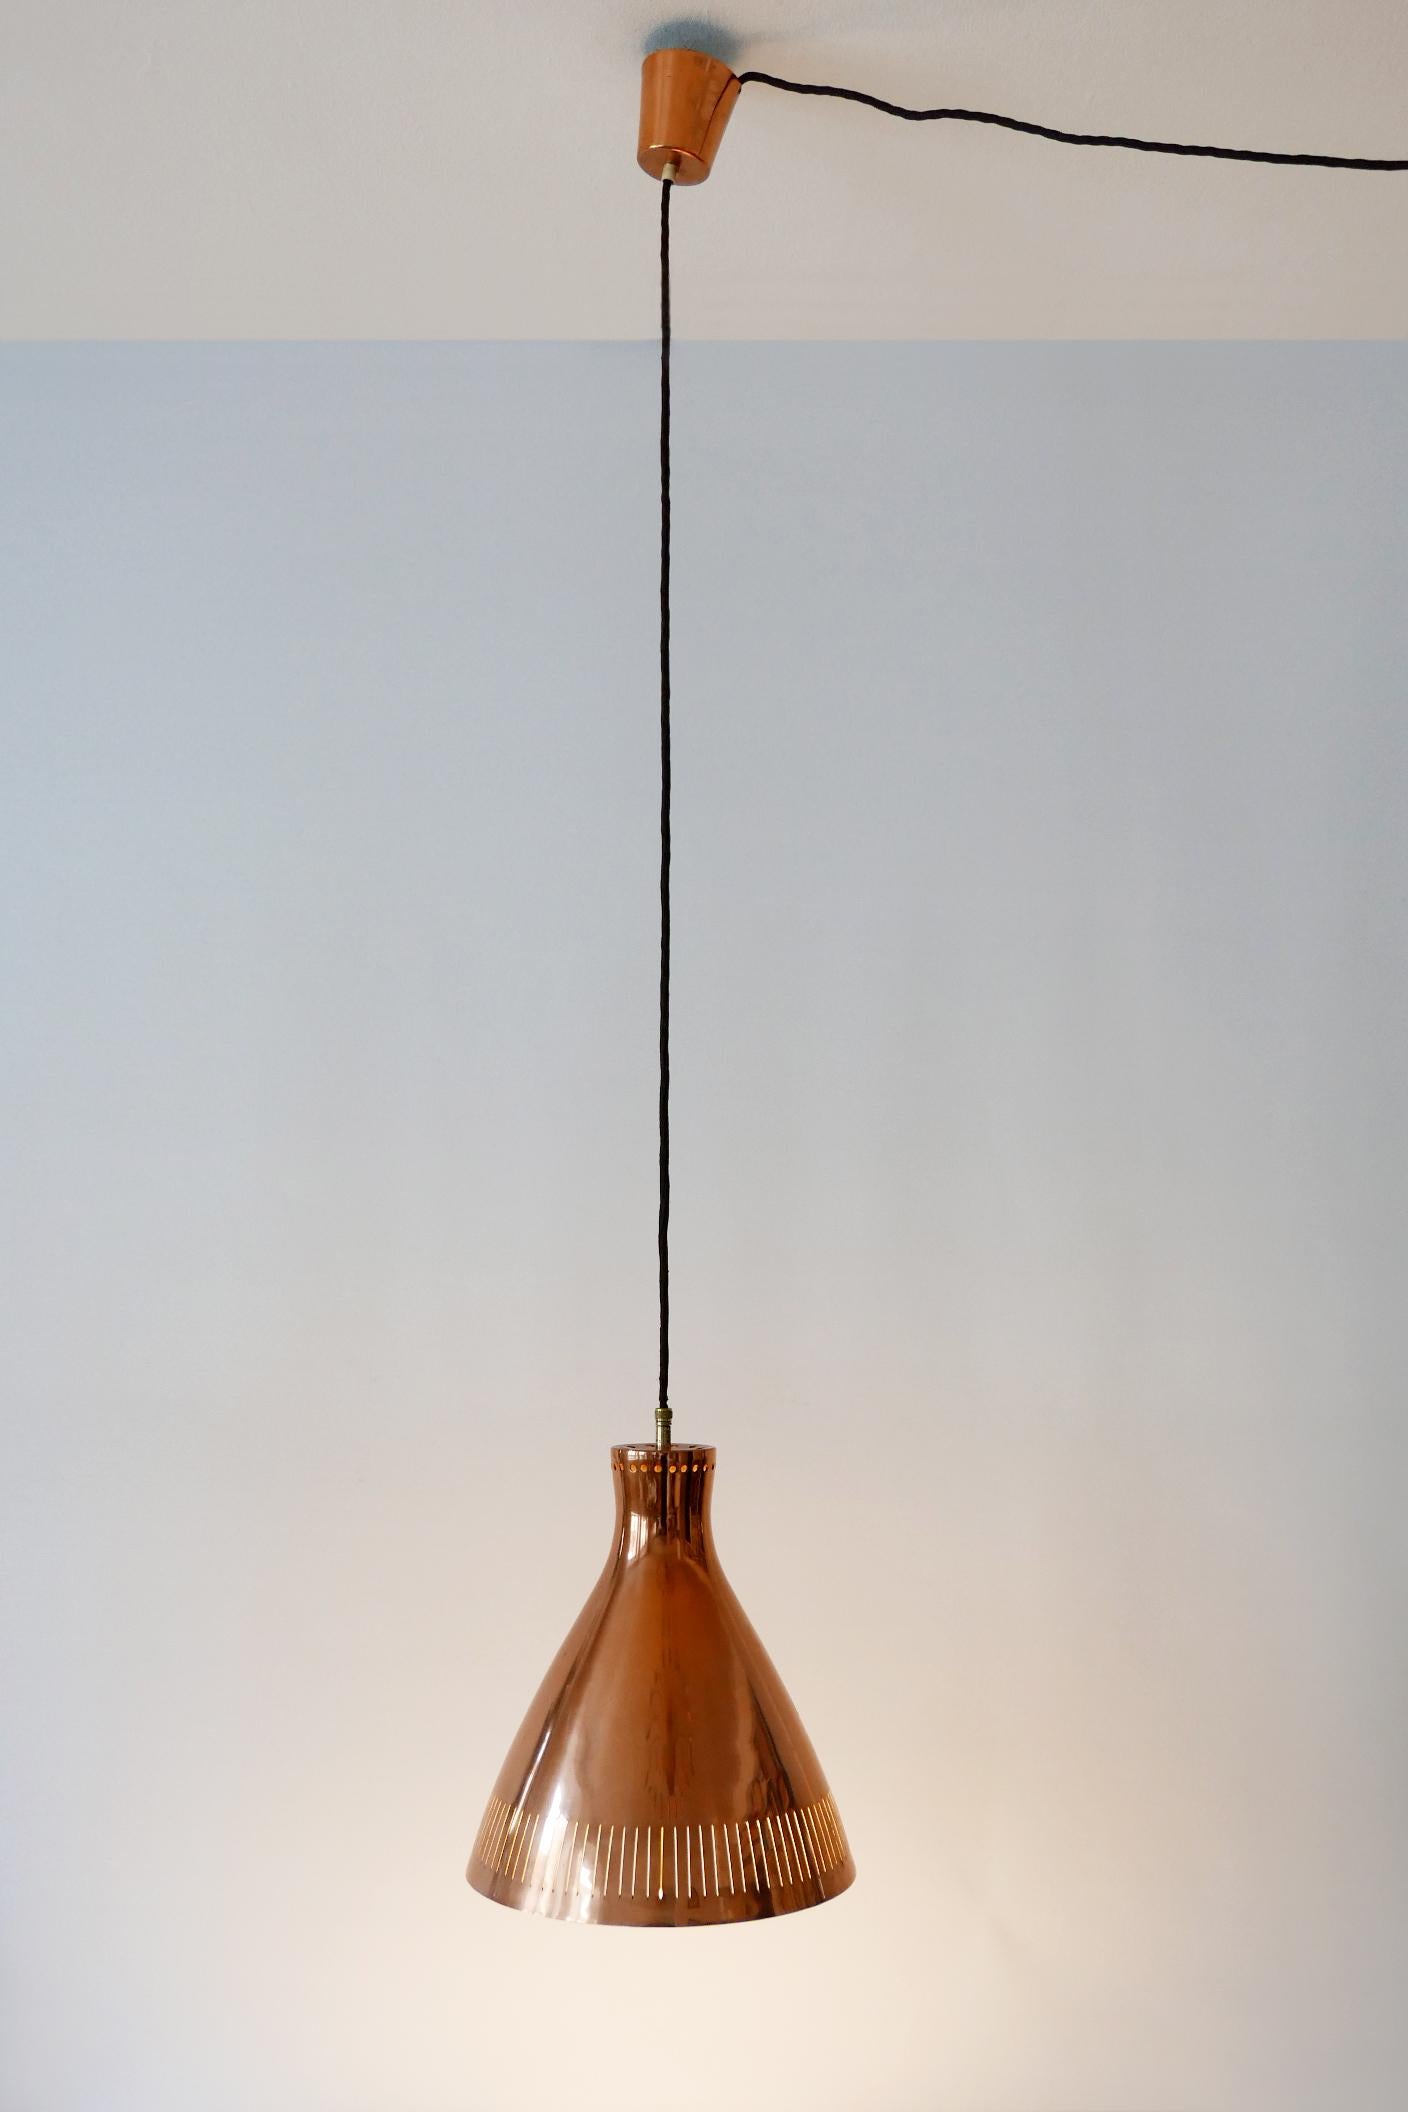 Mid-Century Modern Copper Pendant Lamp by Vereinigte Werkstätten 1960s Germany In Good Condition For Sale In Munich, DE